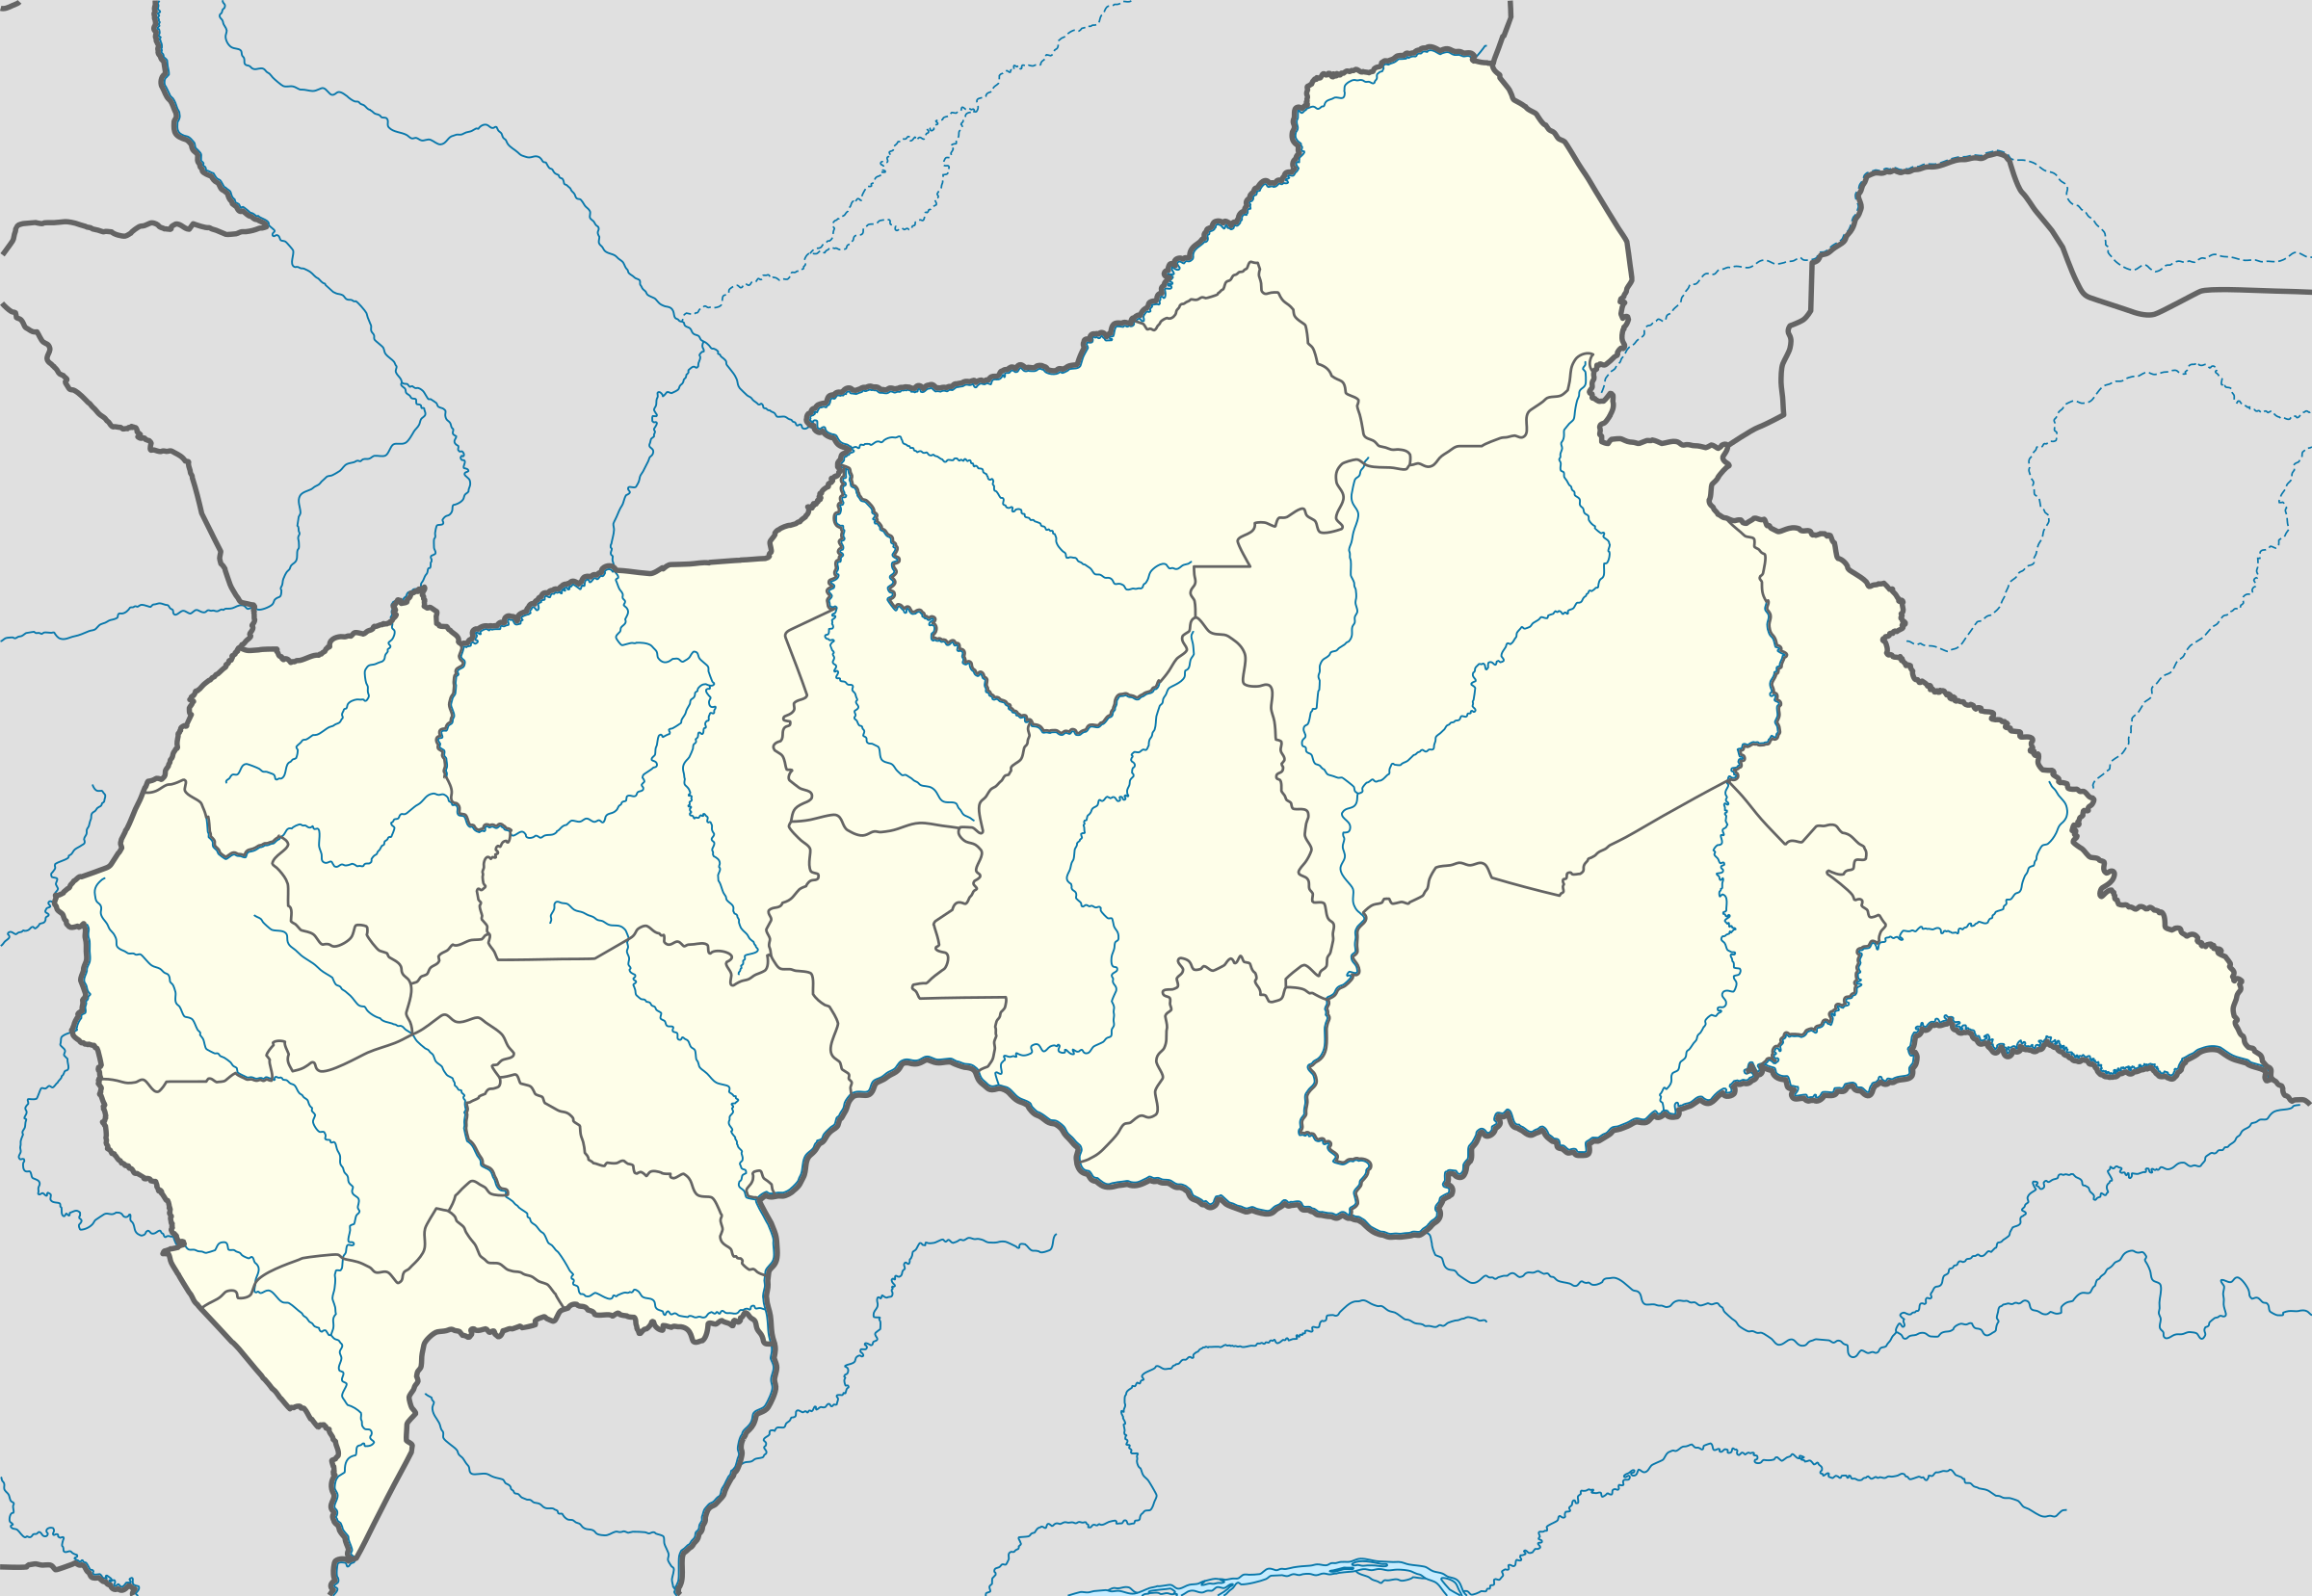 Central African Republic Civil War detailed map is located in Central African Republic